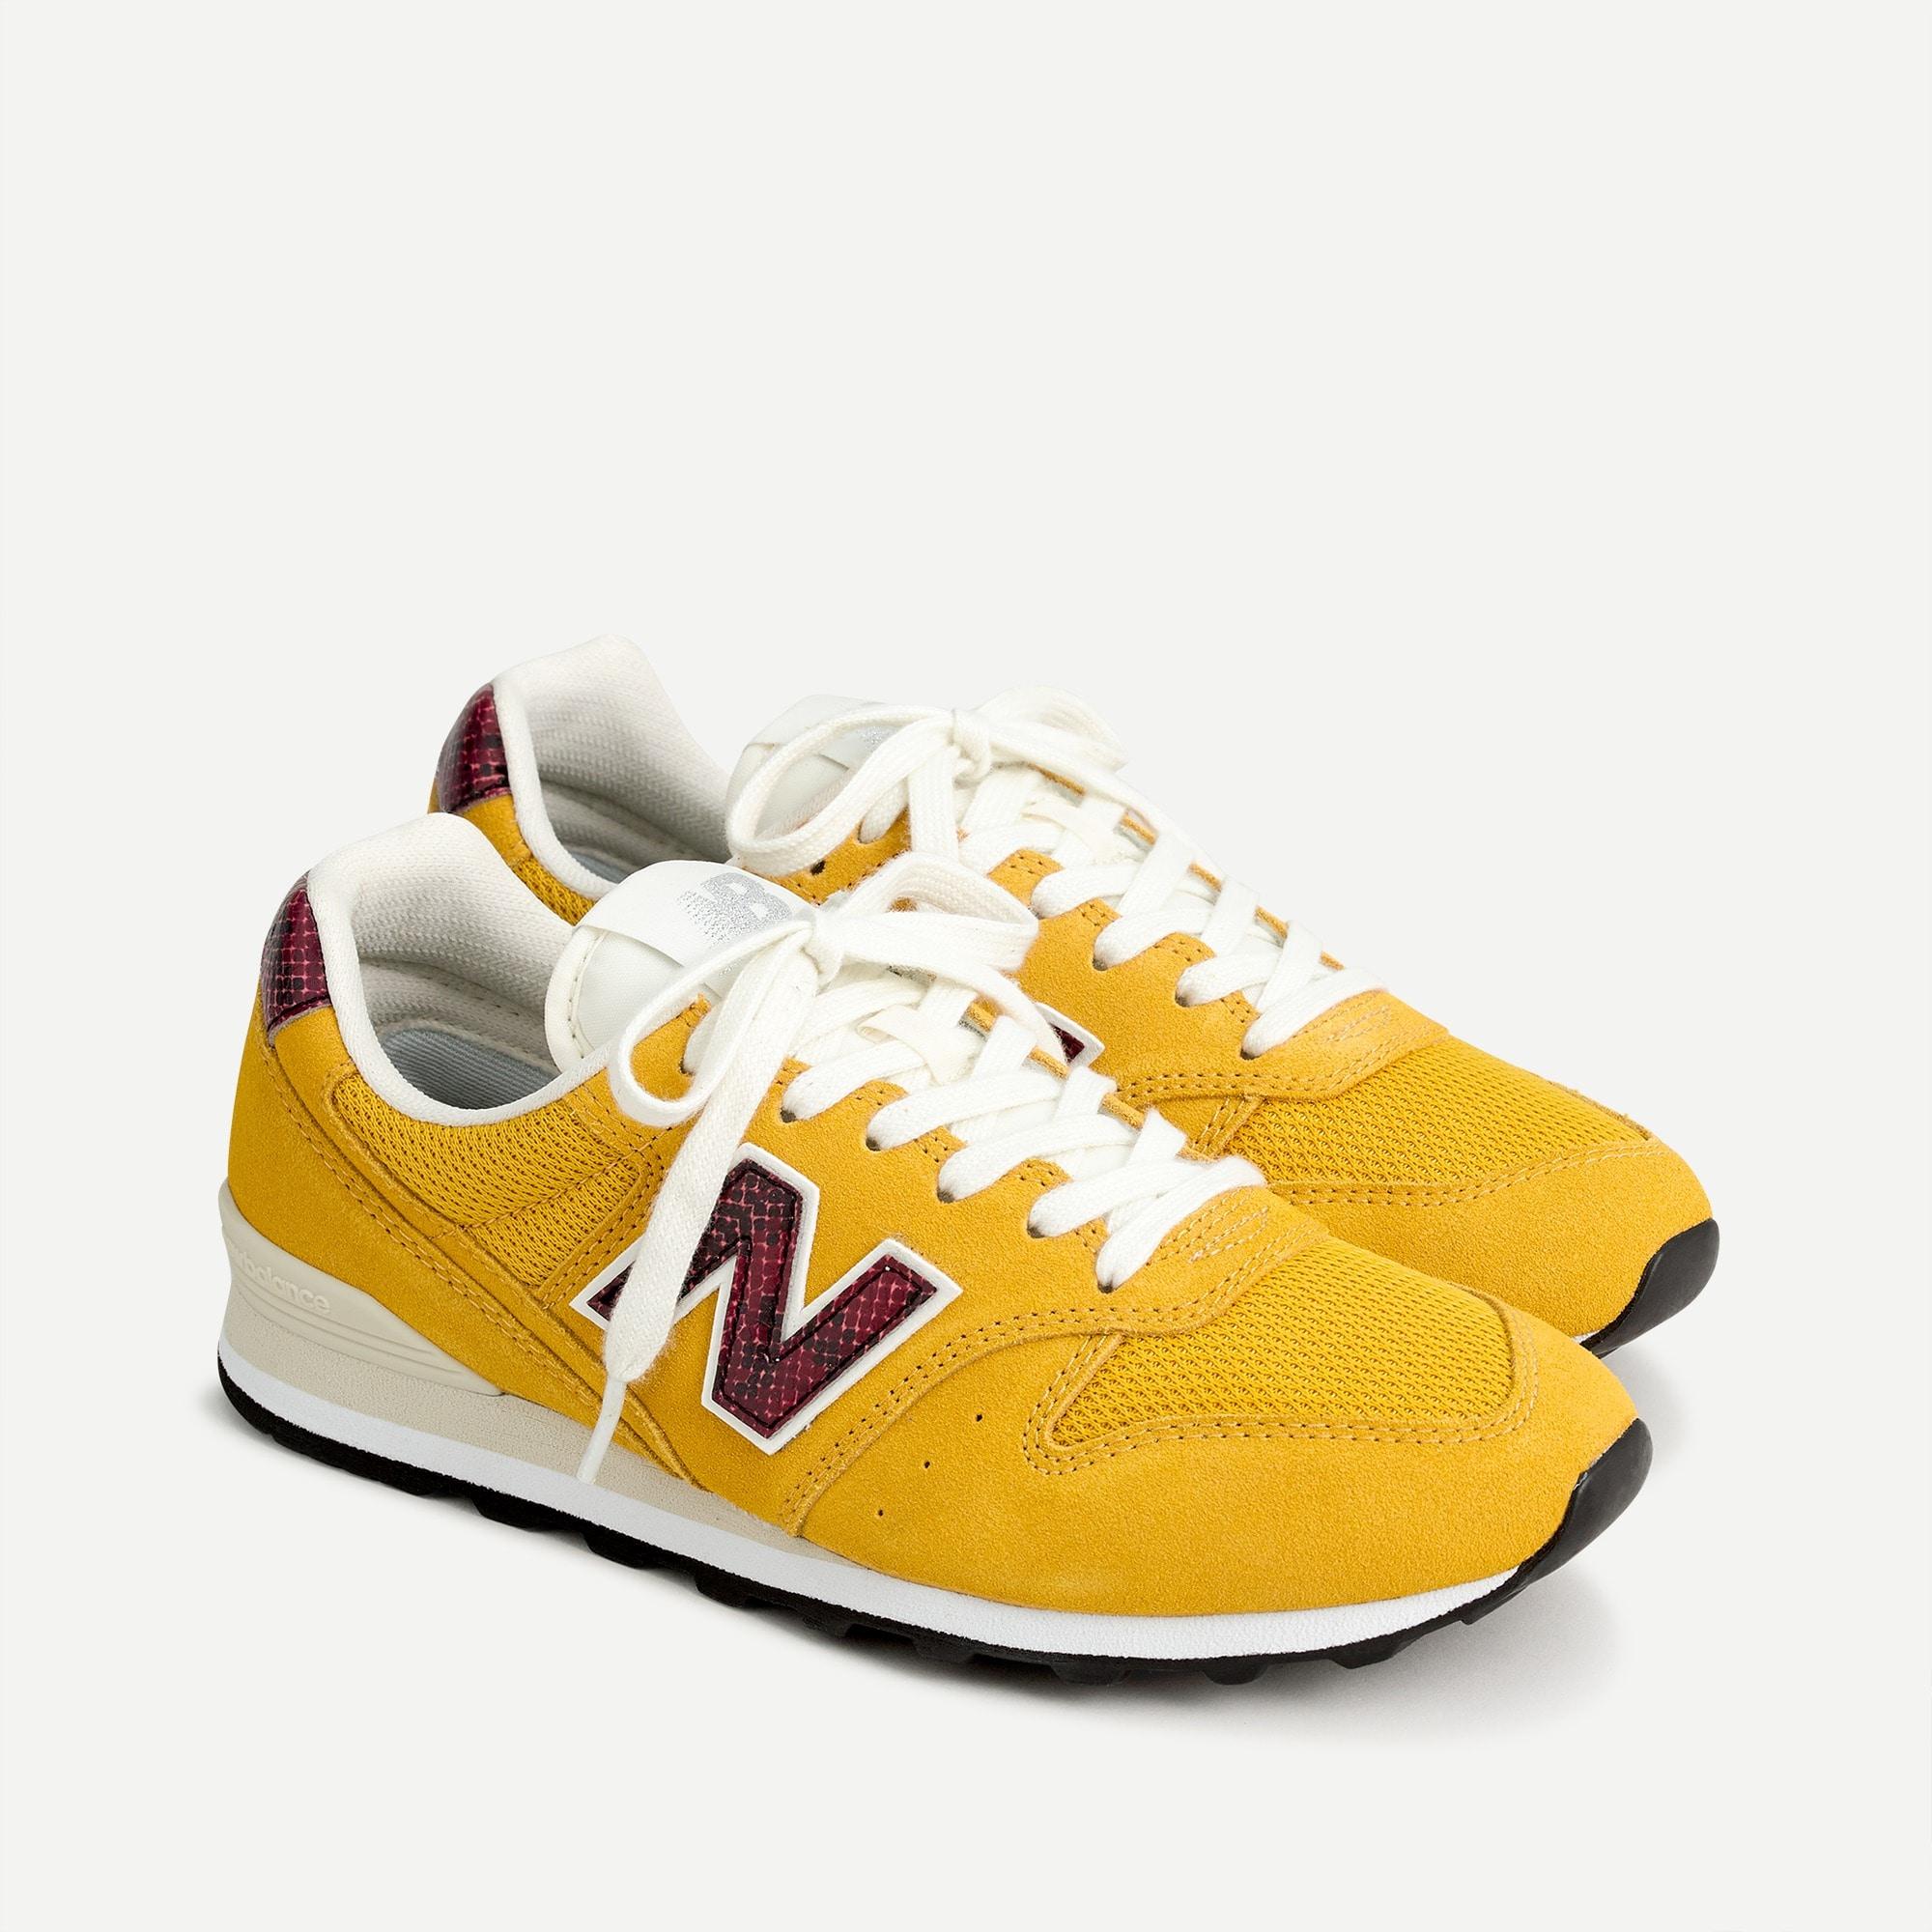 New Balance ® X J.crew 996 Sneakers In Snakeskin in Yellow | Lyst